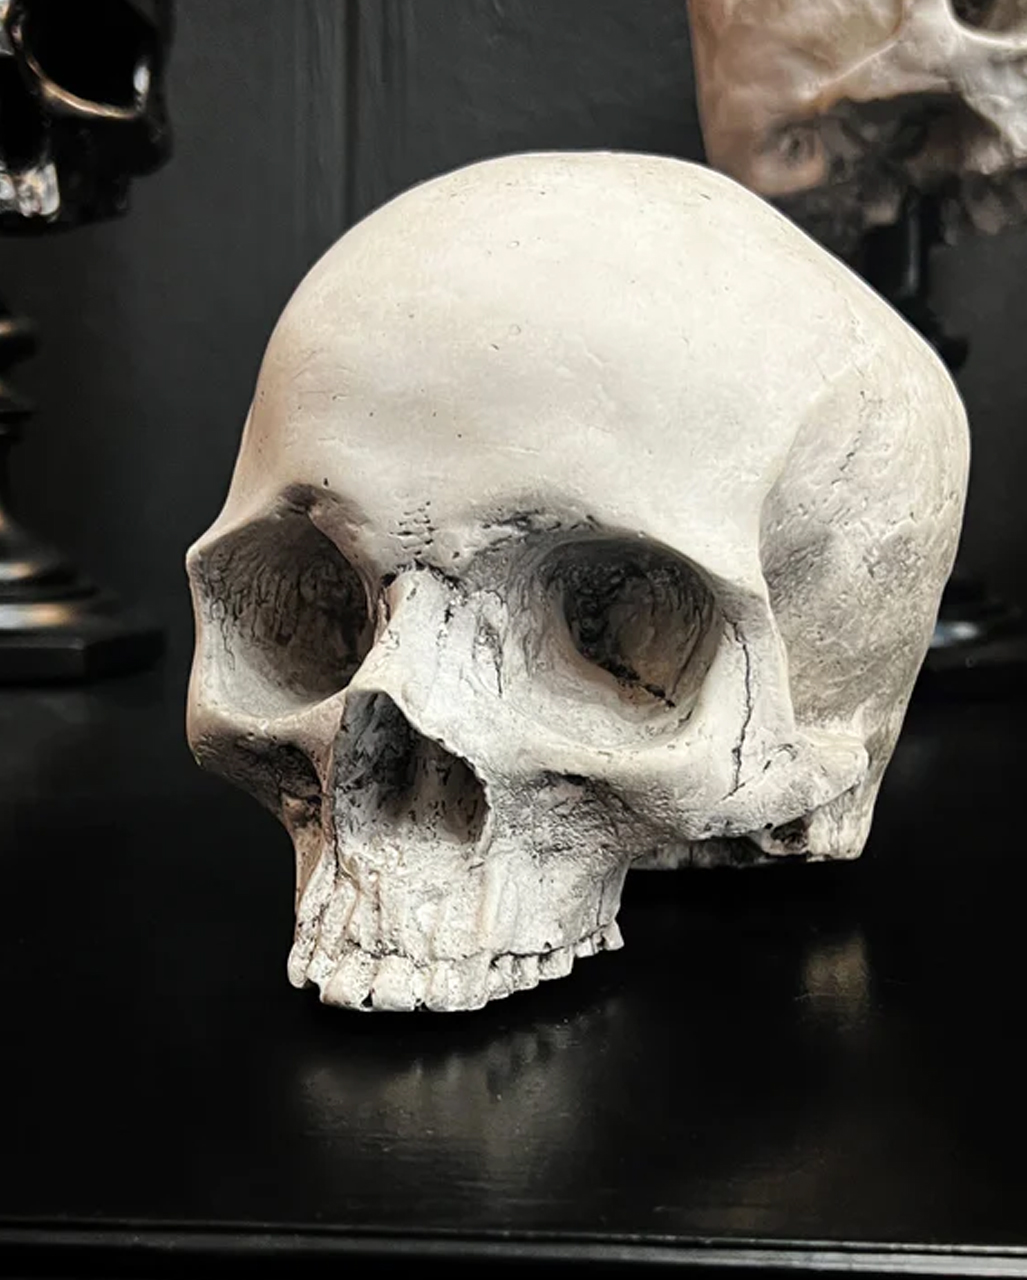 Skull Totenkopf Teelicht Teelichthalter Kerzenständer Kerze Gothic